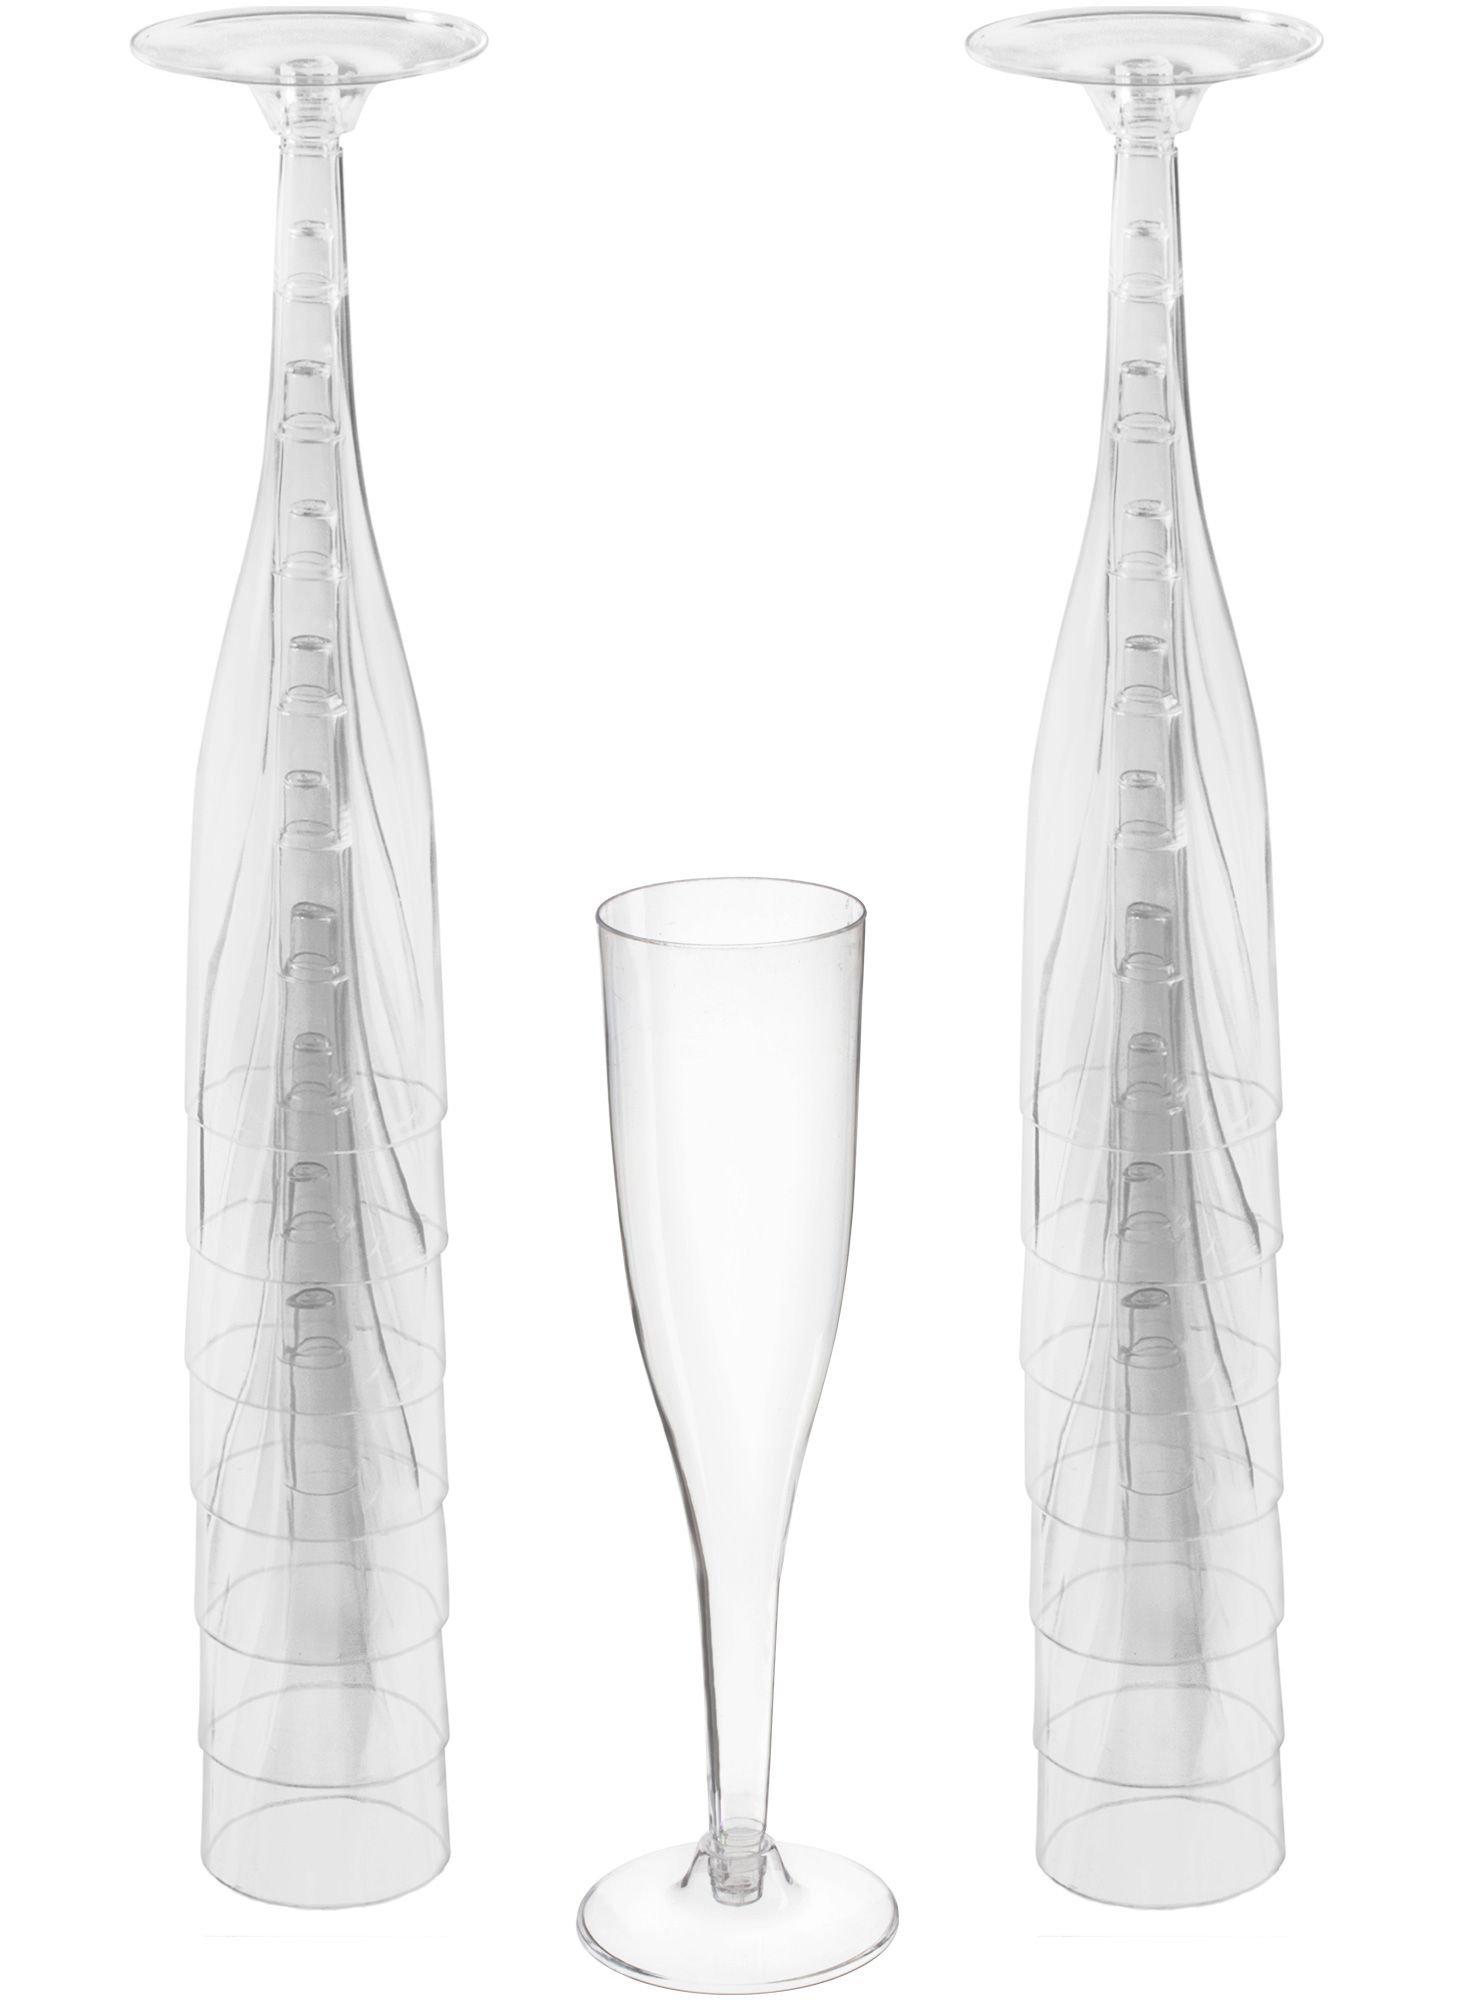 Amscan Plastic Champagne Flutes, 5.5 oz, Clear